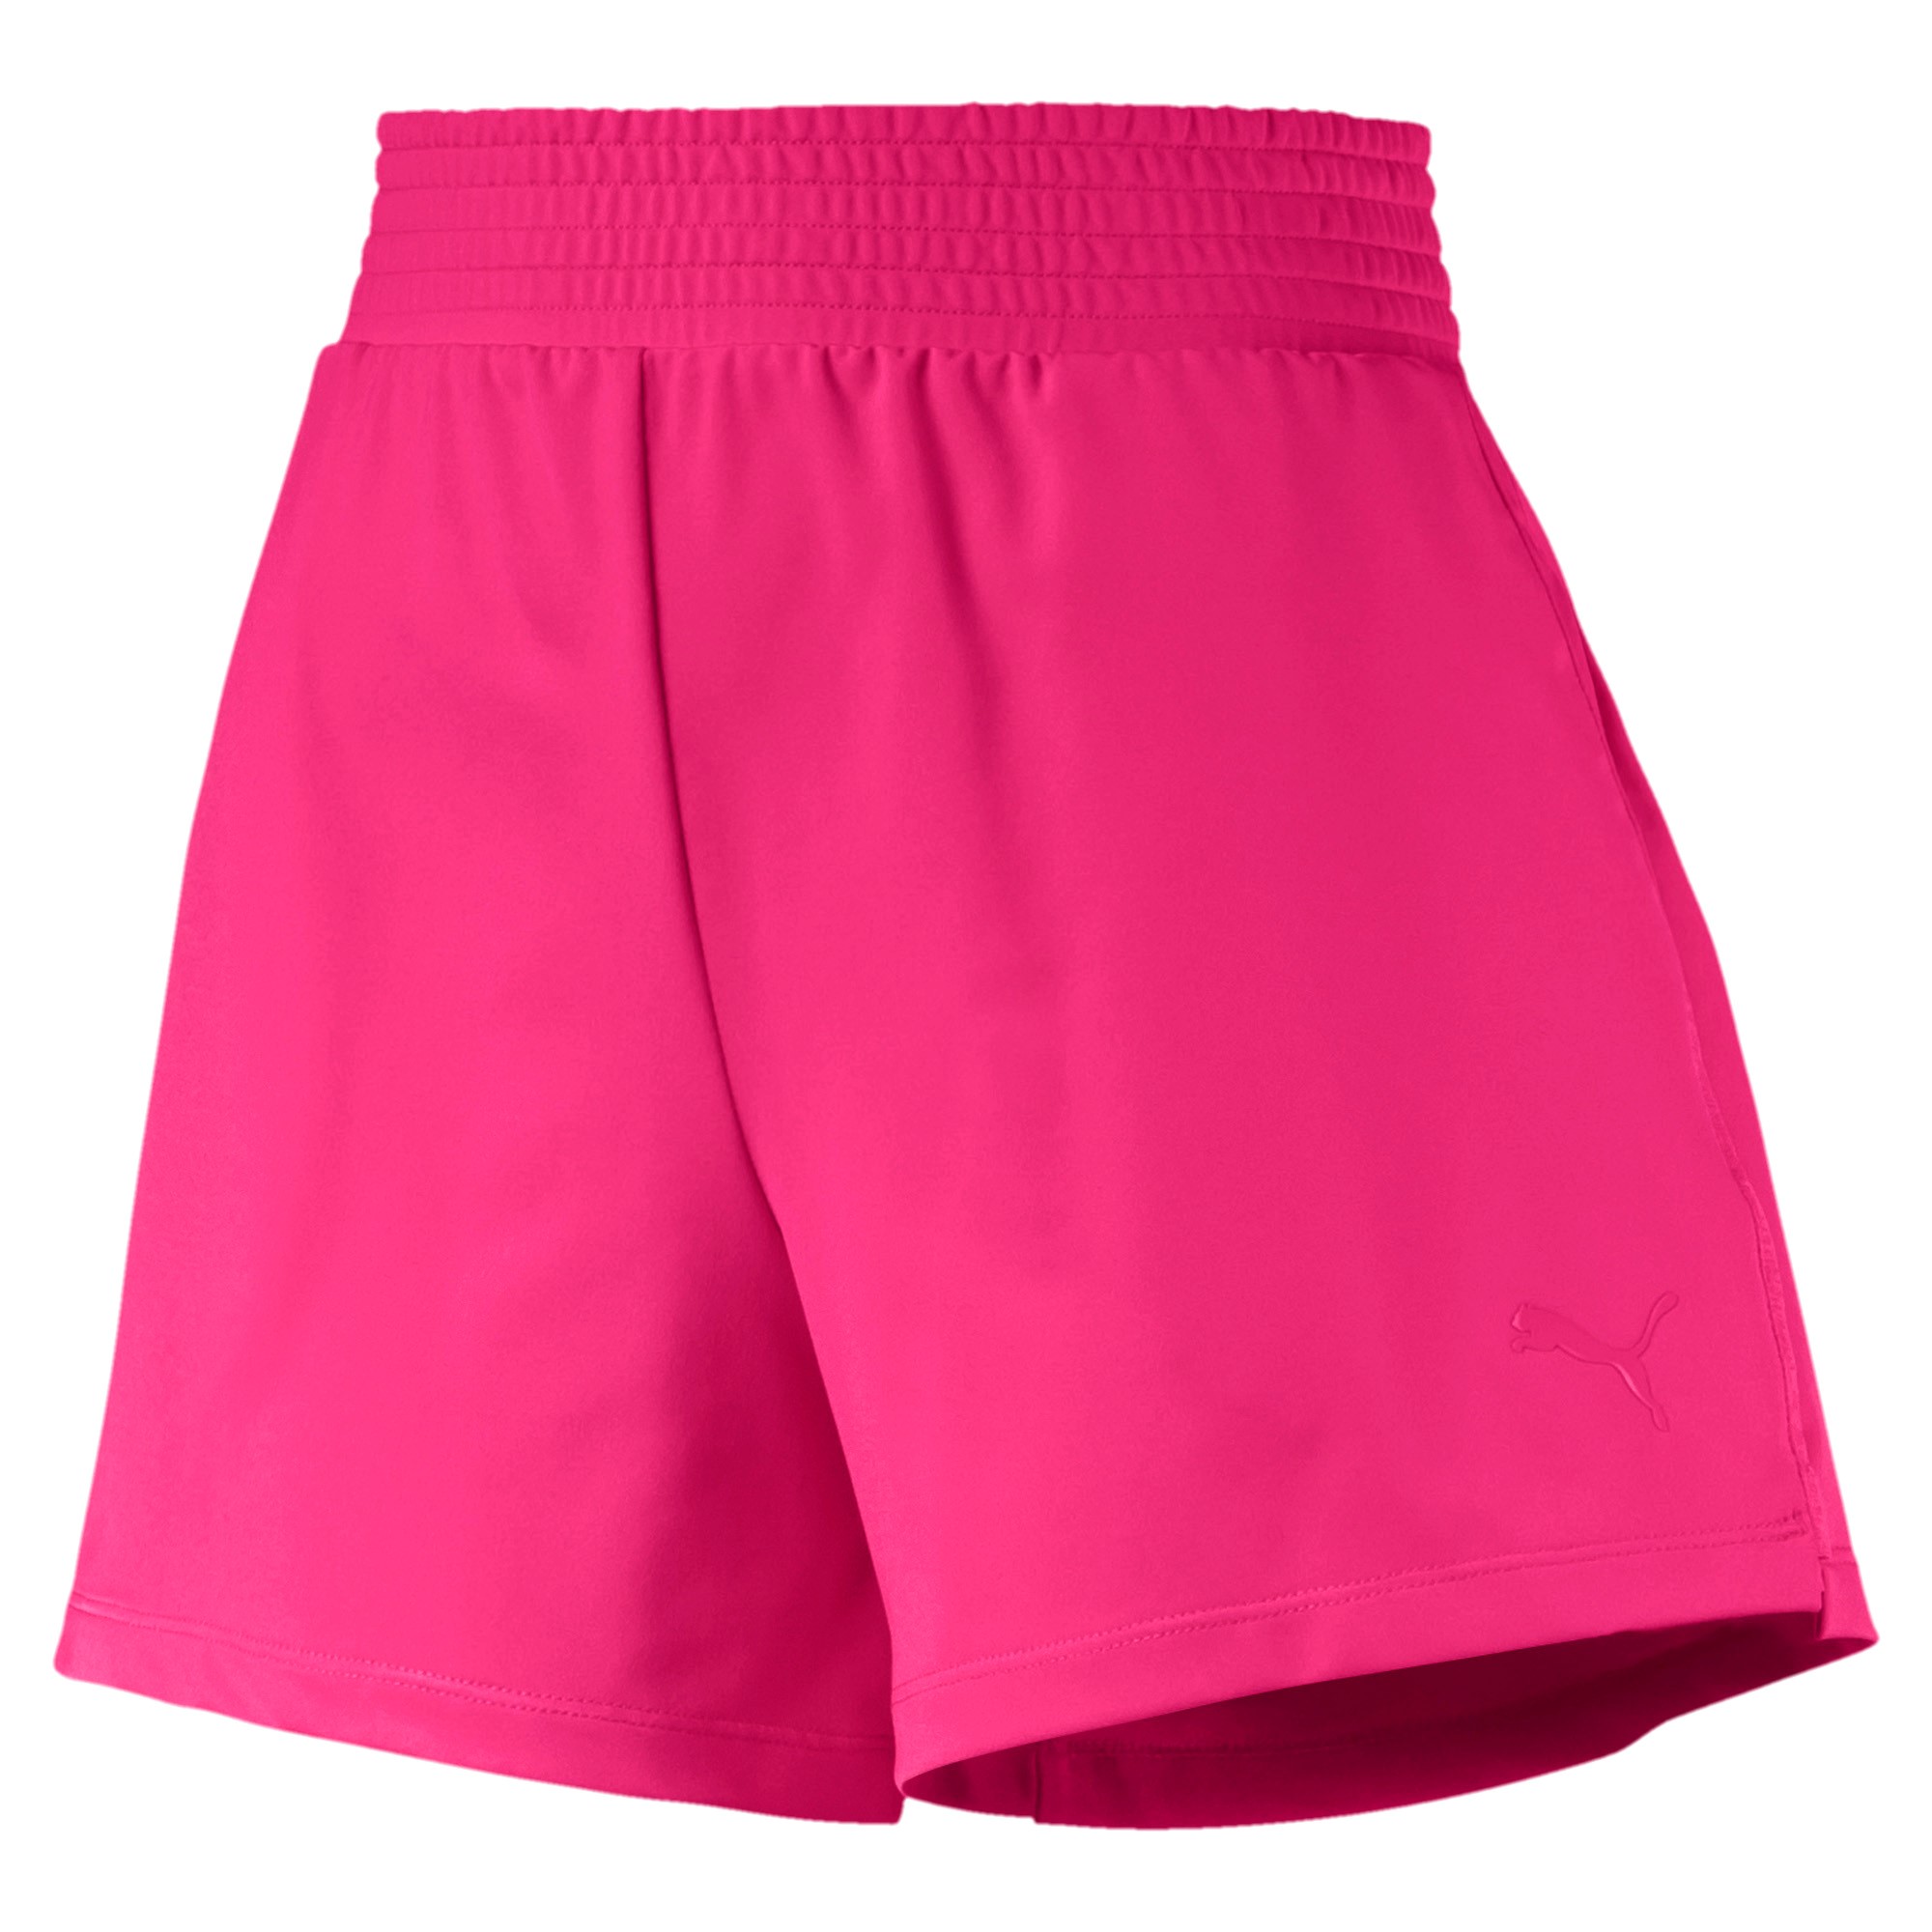 PUMA Damen Soft Sport Shorts Pant Hose Pants Fitnesshose 854330 20 pink